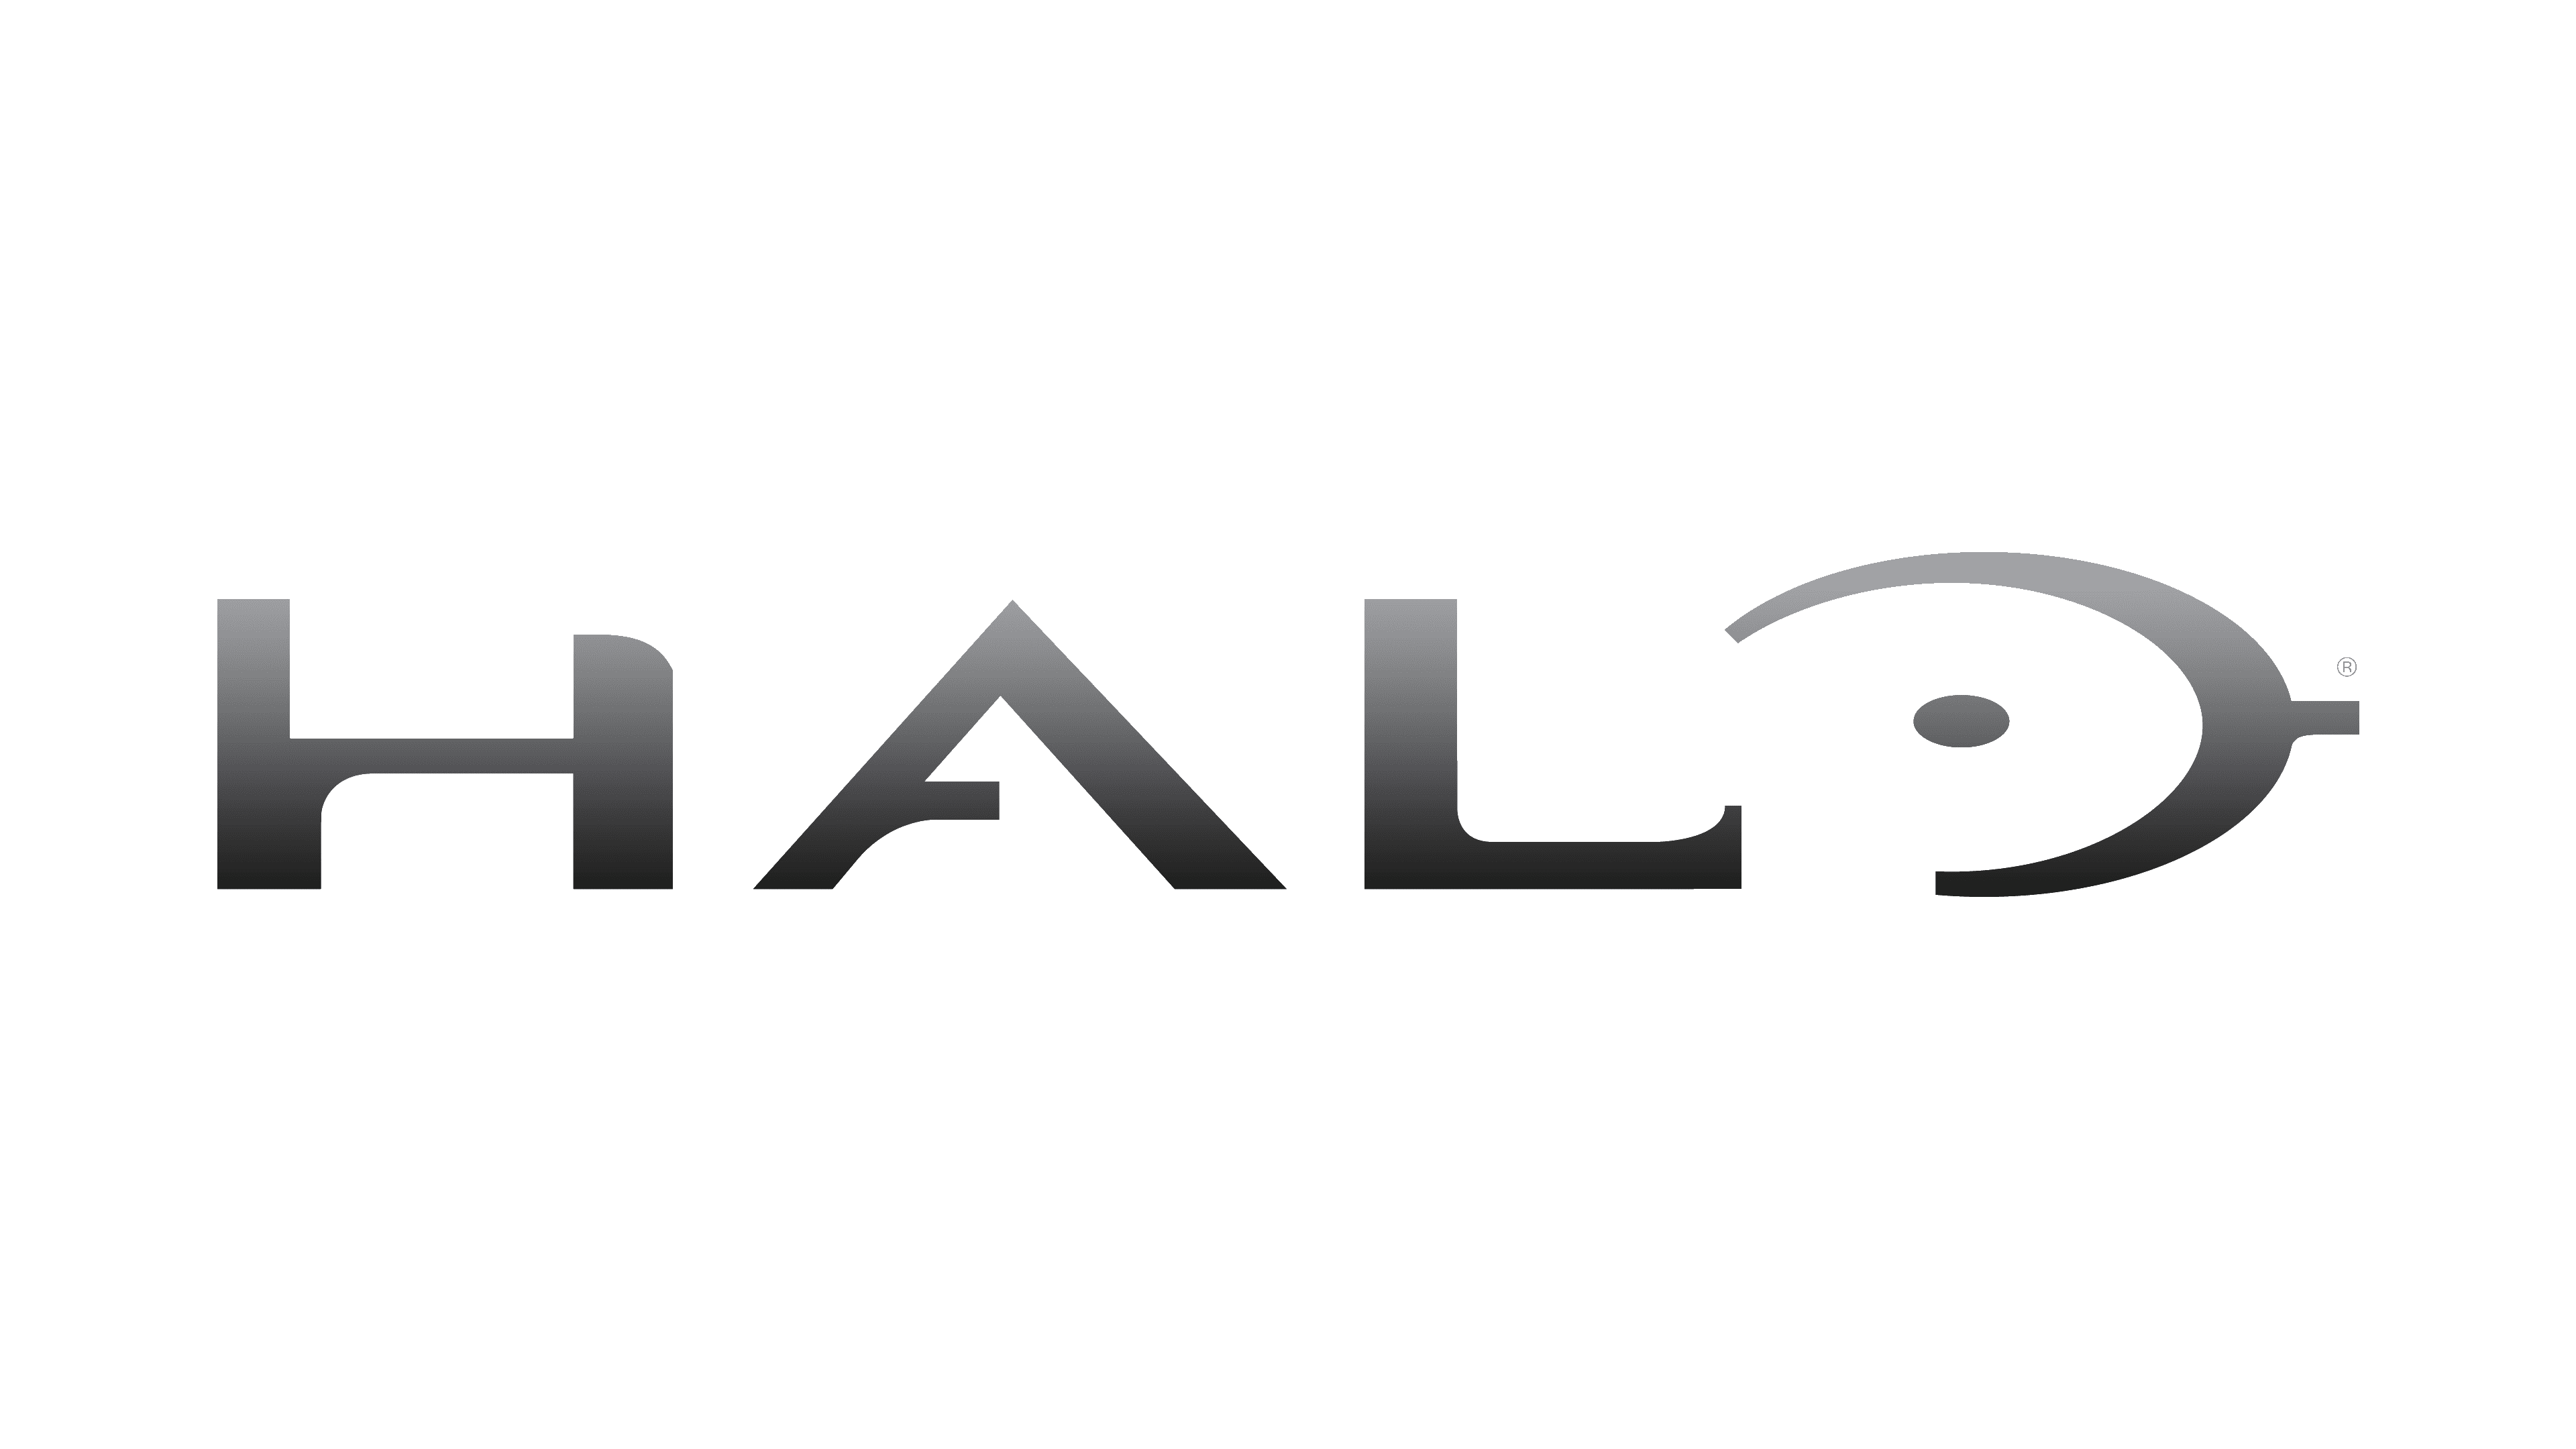 Halo Logo Outline